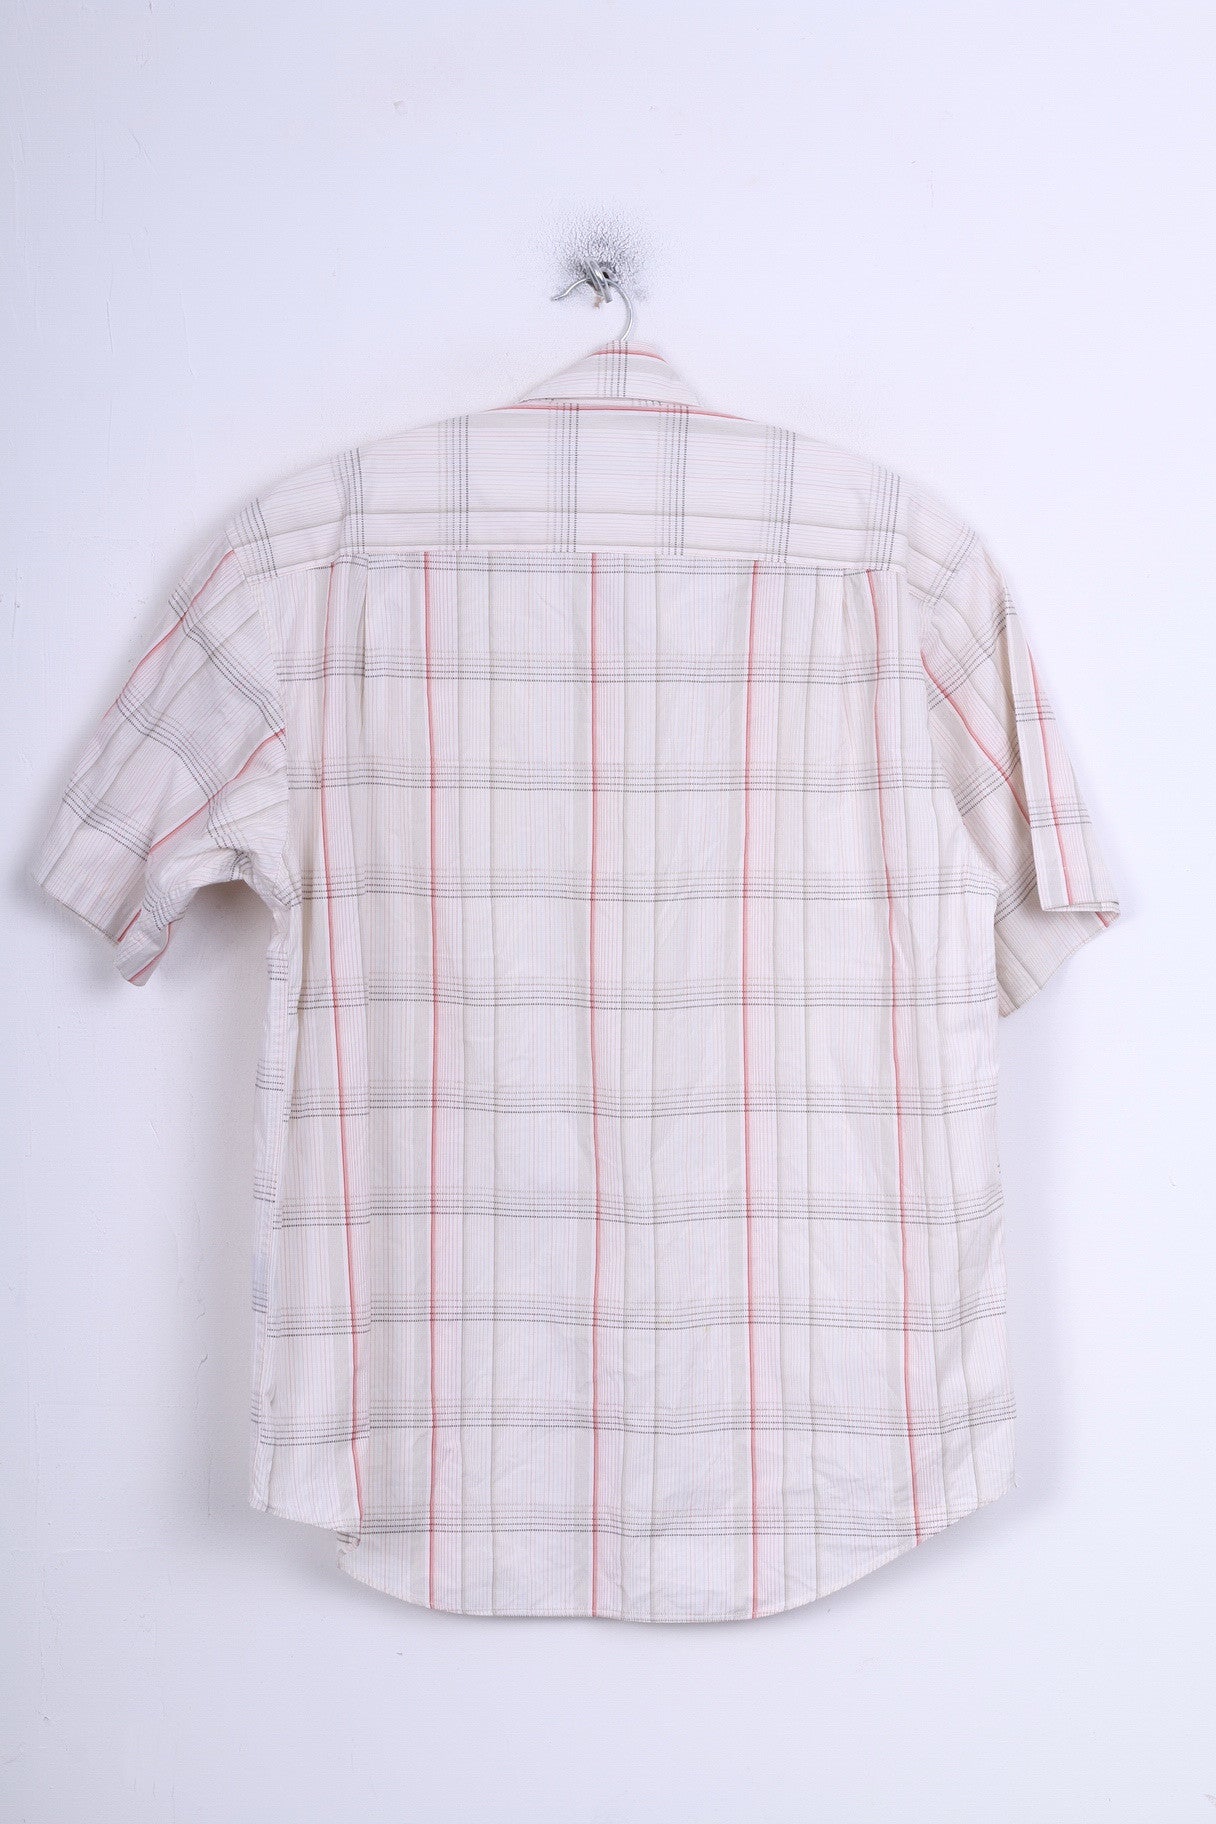 Nautica Mens M Casual Shirt Check Ecru Cotton Short Sleeve